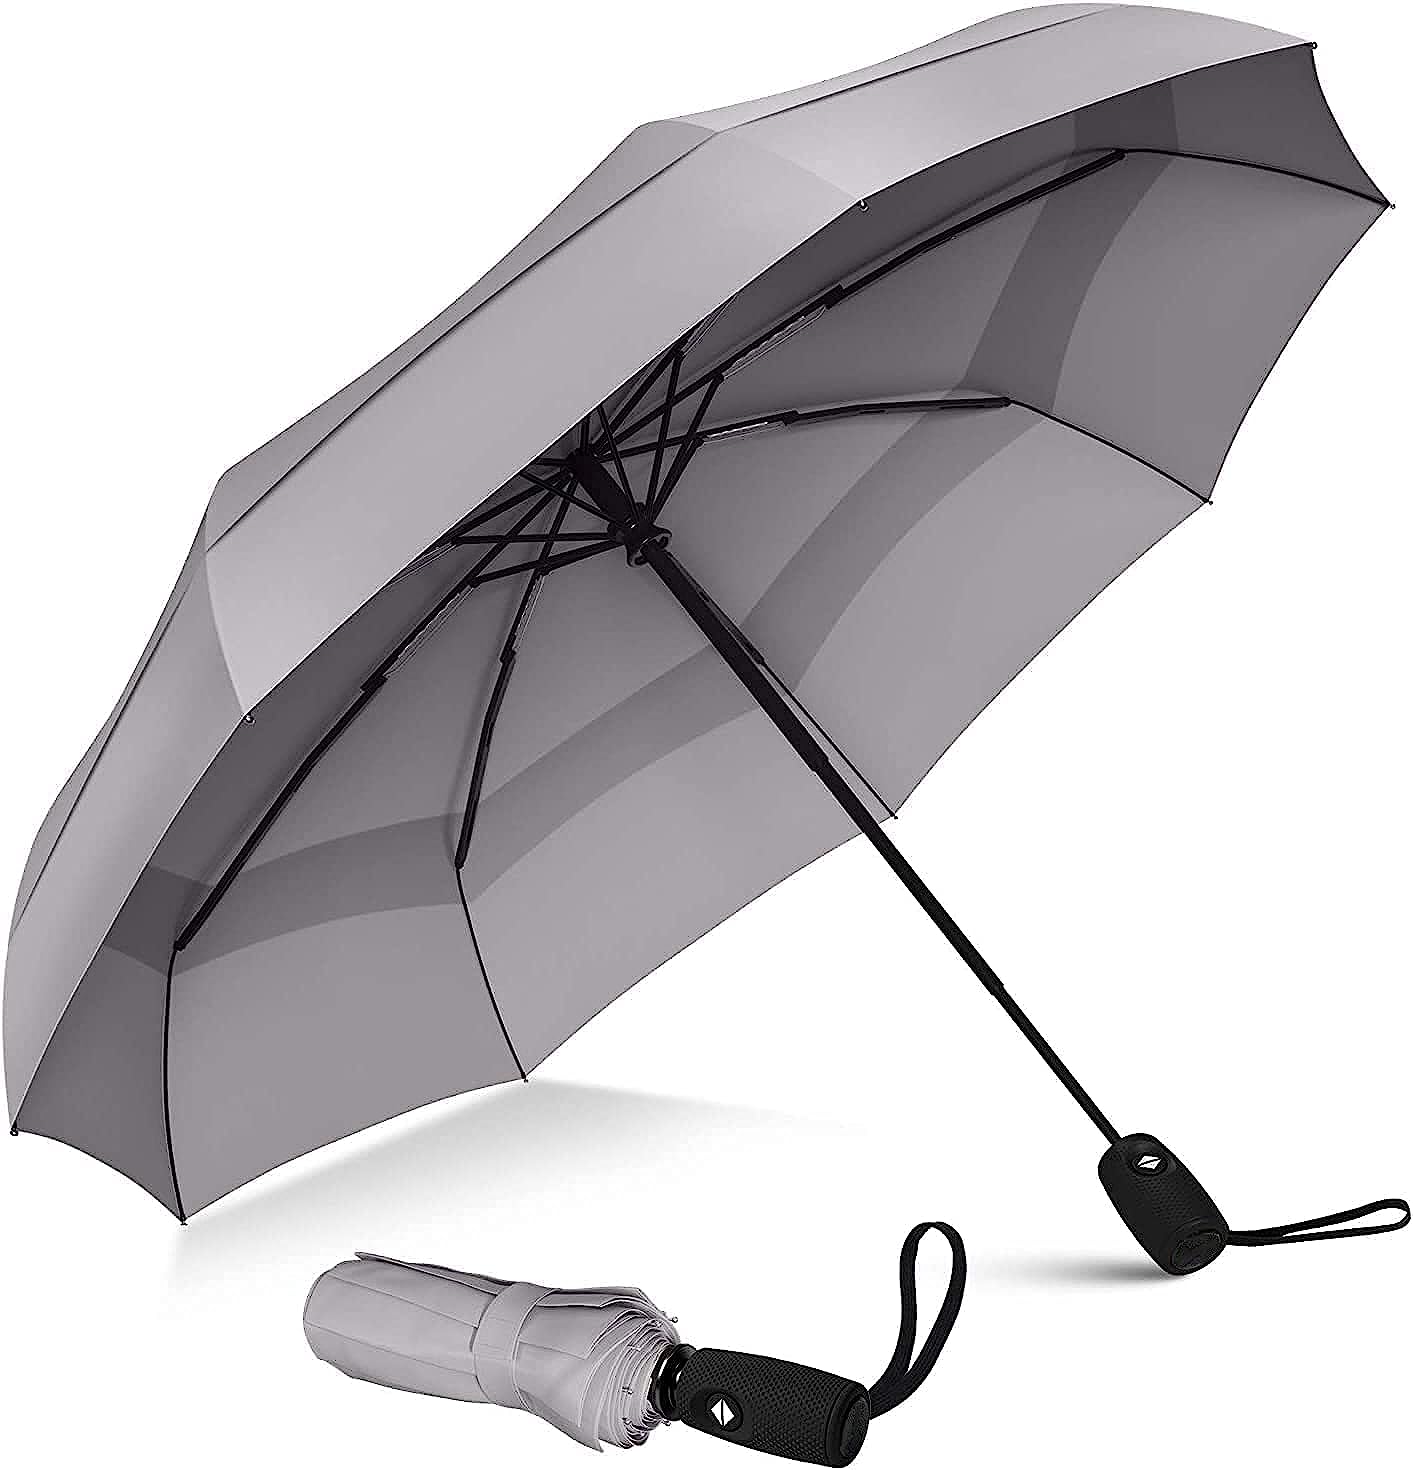 zemic portable travel umbrella